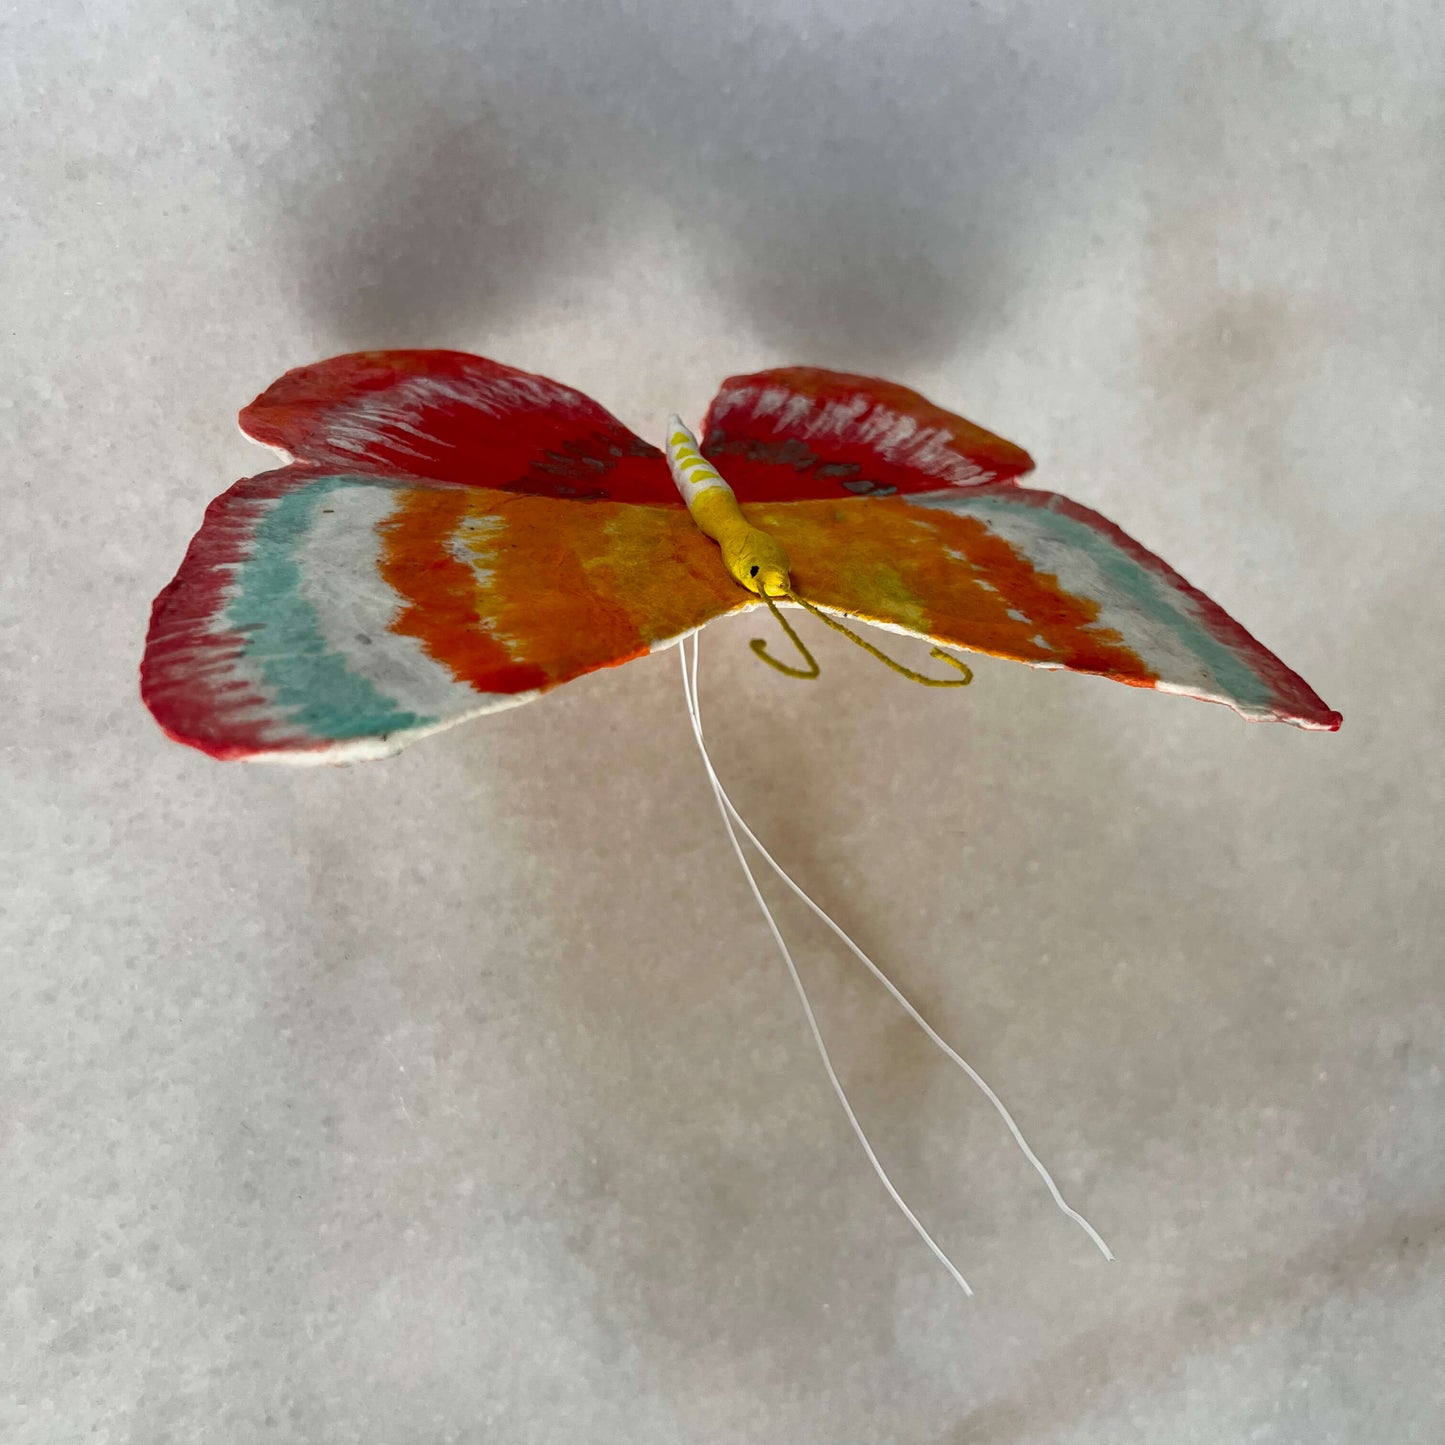 Handmade Spun Cotton Mystic Multi-color Butterfly